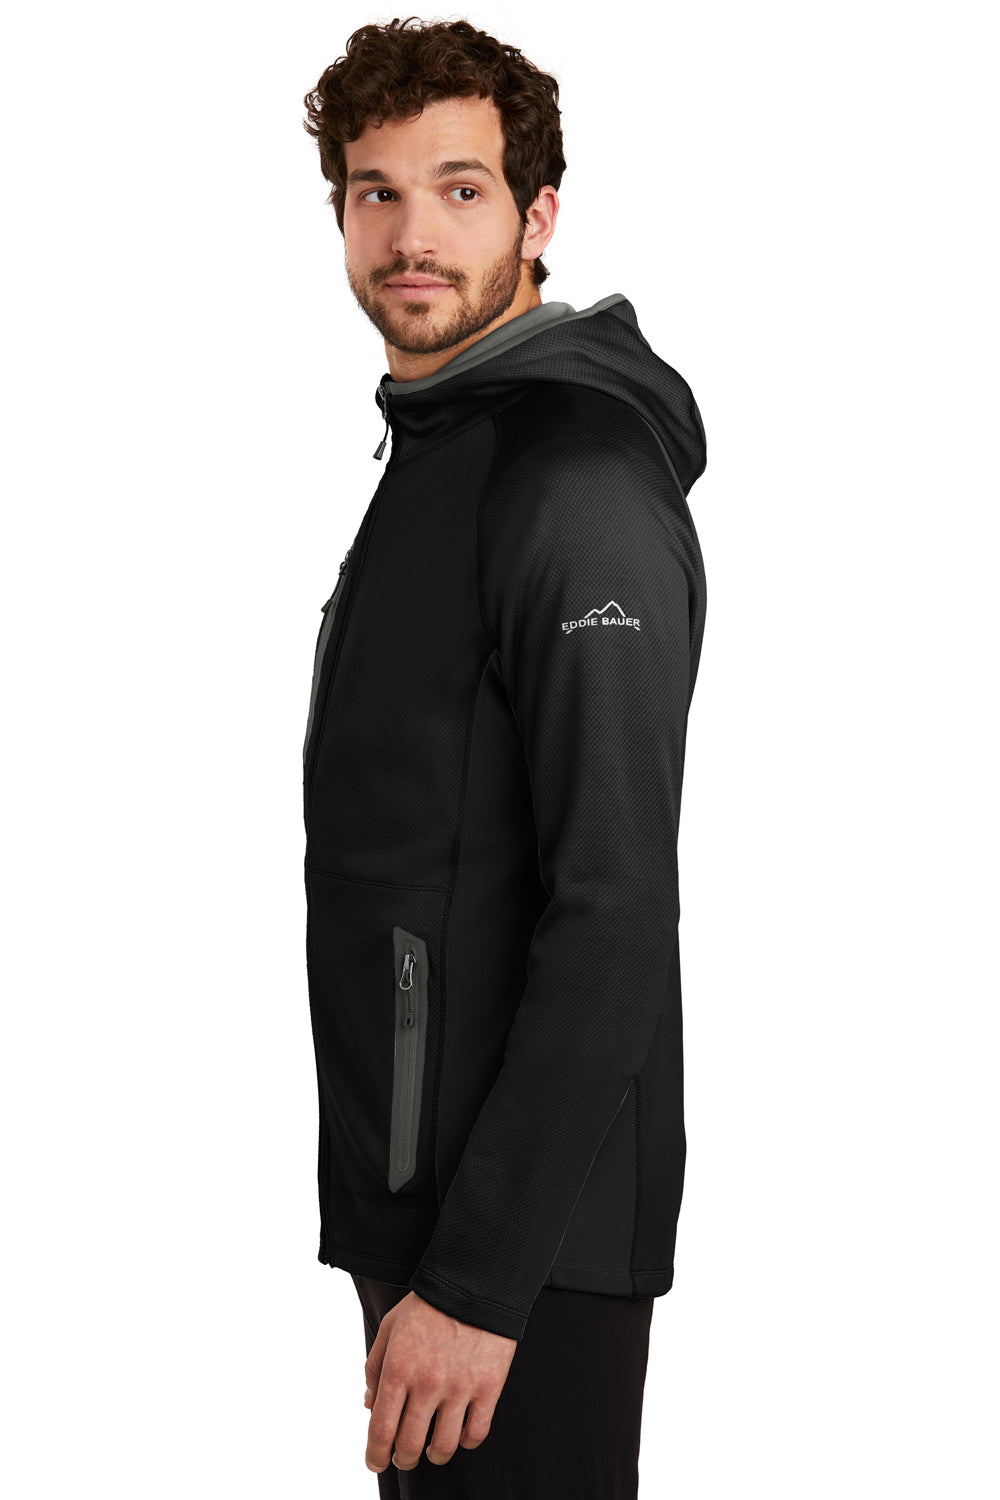 Eddie Bauer EB244 Mens Sport Pill Resistant Fleece Full Zip Hooded Jacket Black Model Side